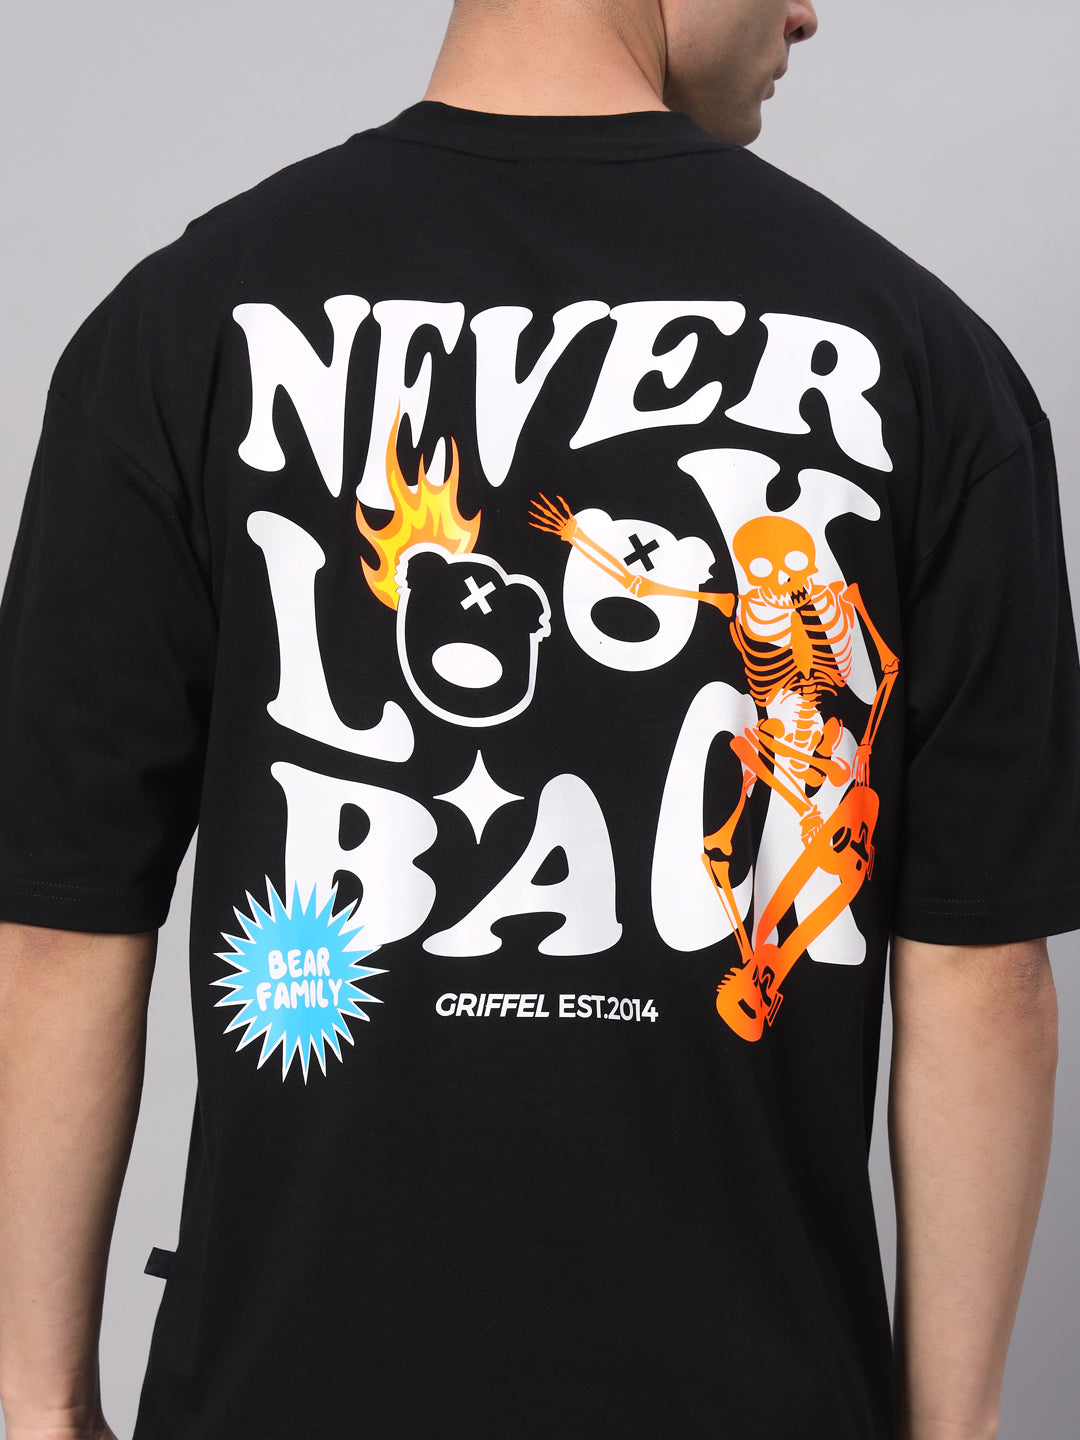 Never Look Back Drop Shoulder Oversized T-shirt - griffel